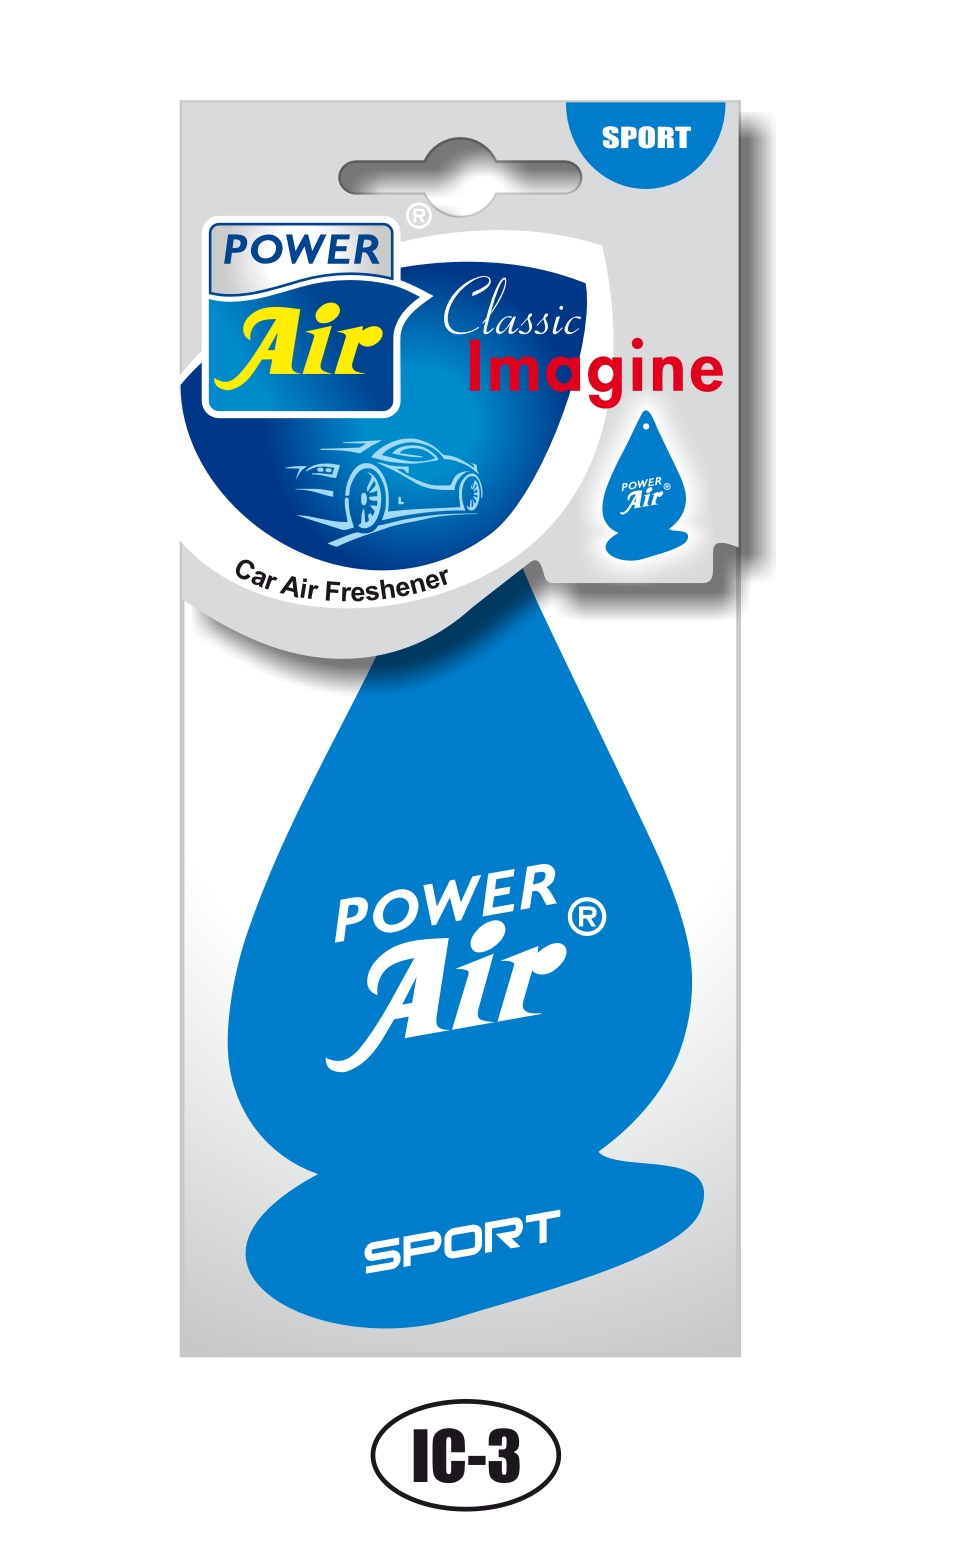 Power Air Imagine Clasic osviežovač vzduchu Sport